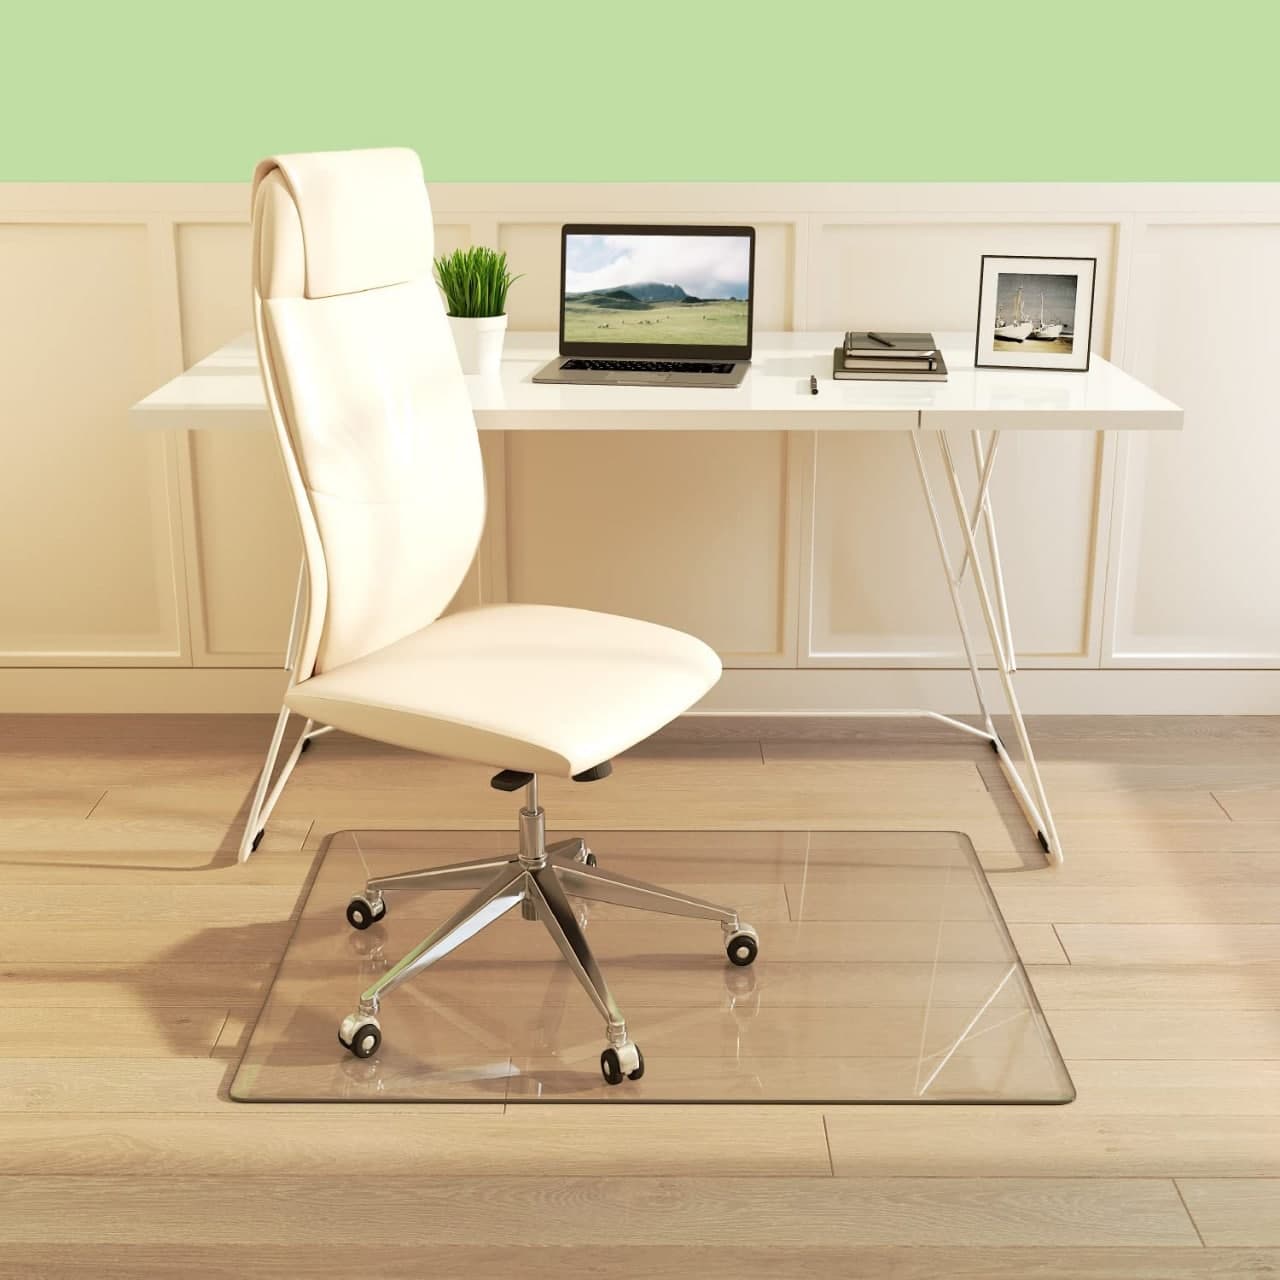 Rectangular glass chair mat for office or home